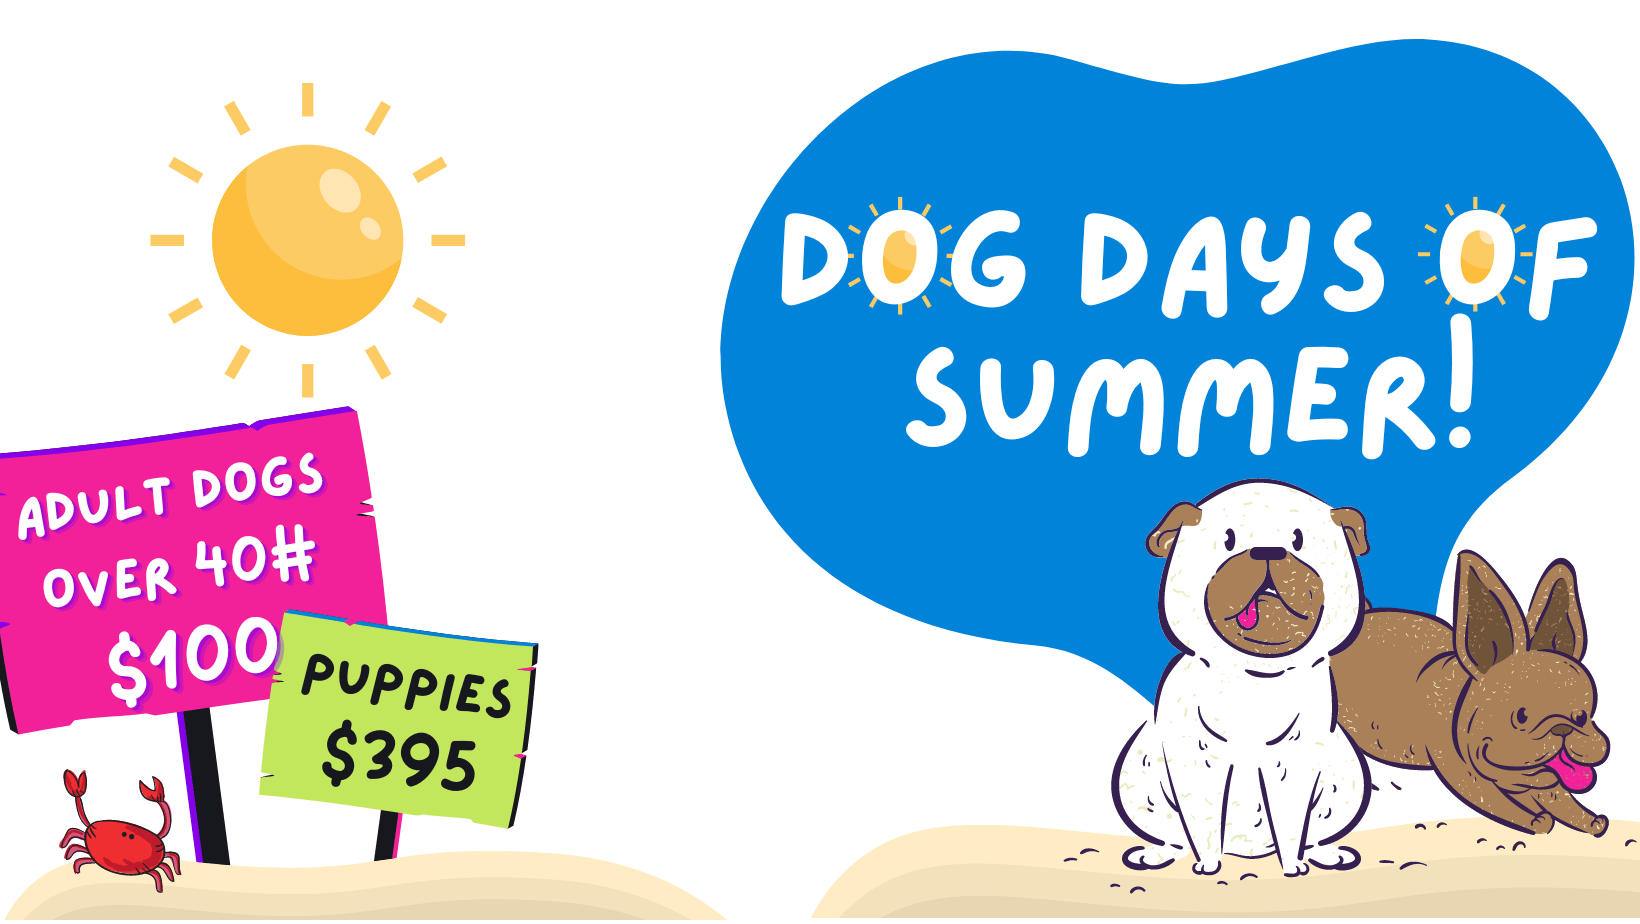 Dog Days of Summer!